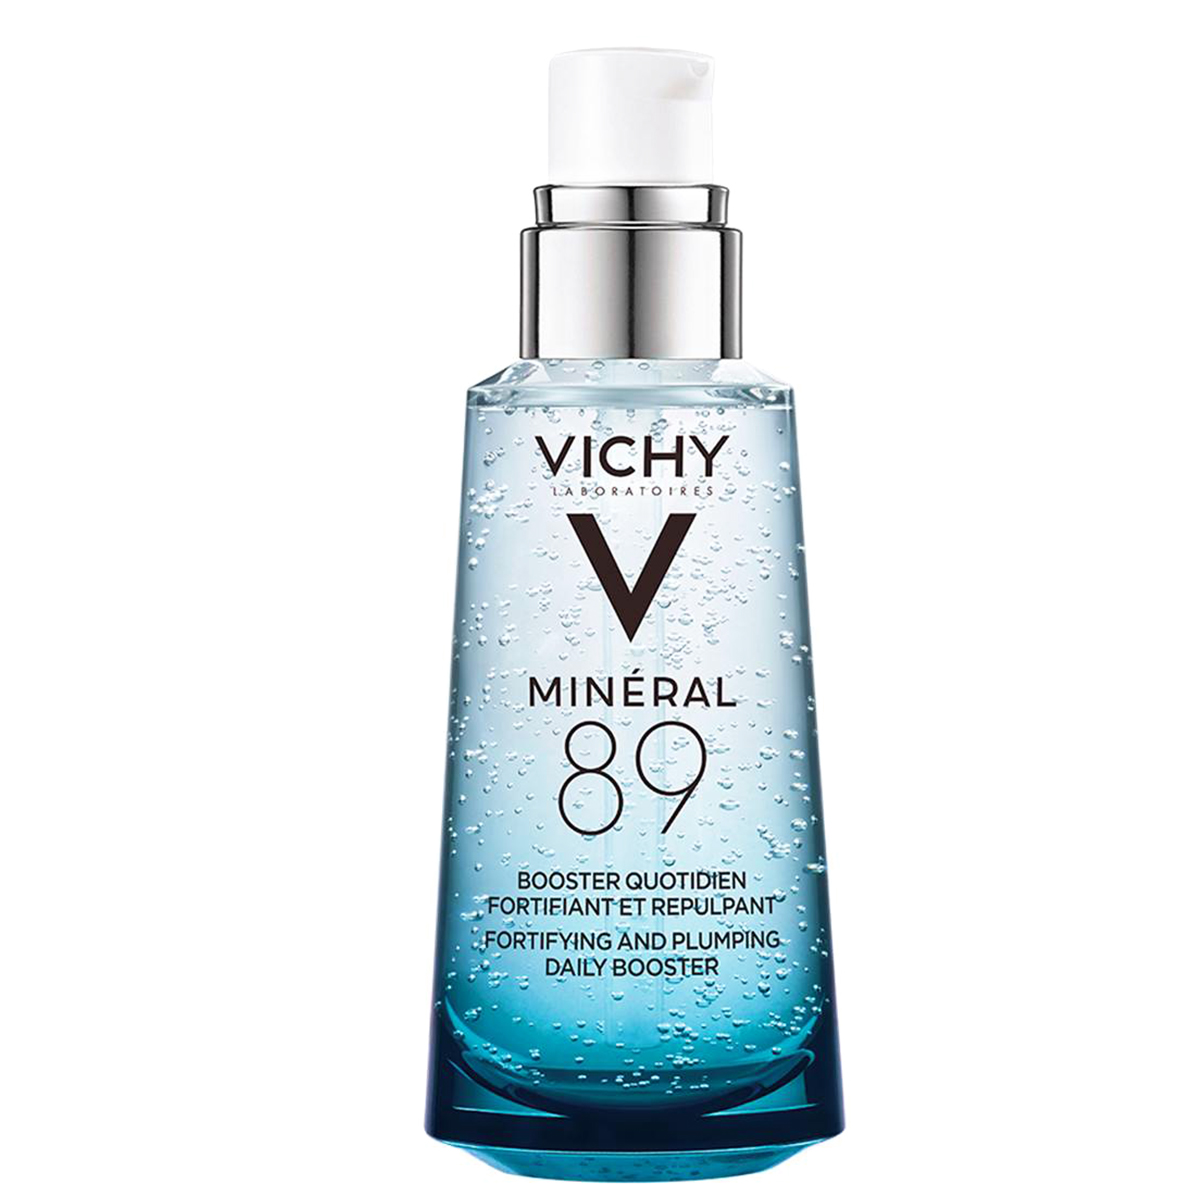 Hidratante Facial Vichy Minéral 89 50ml